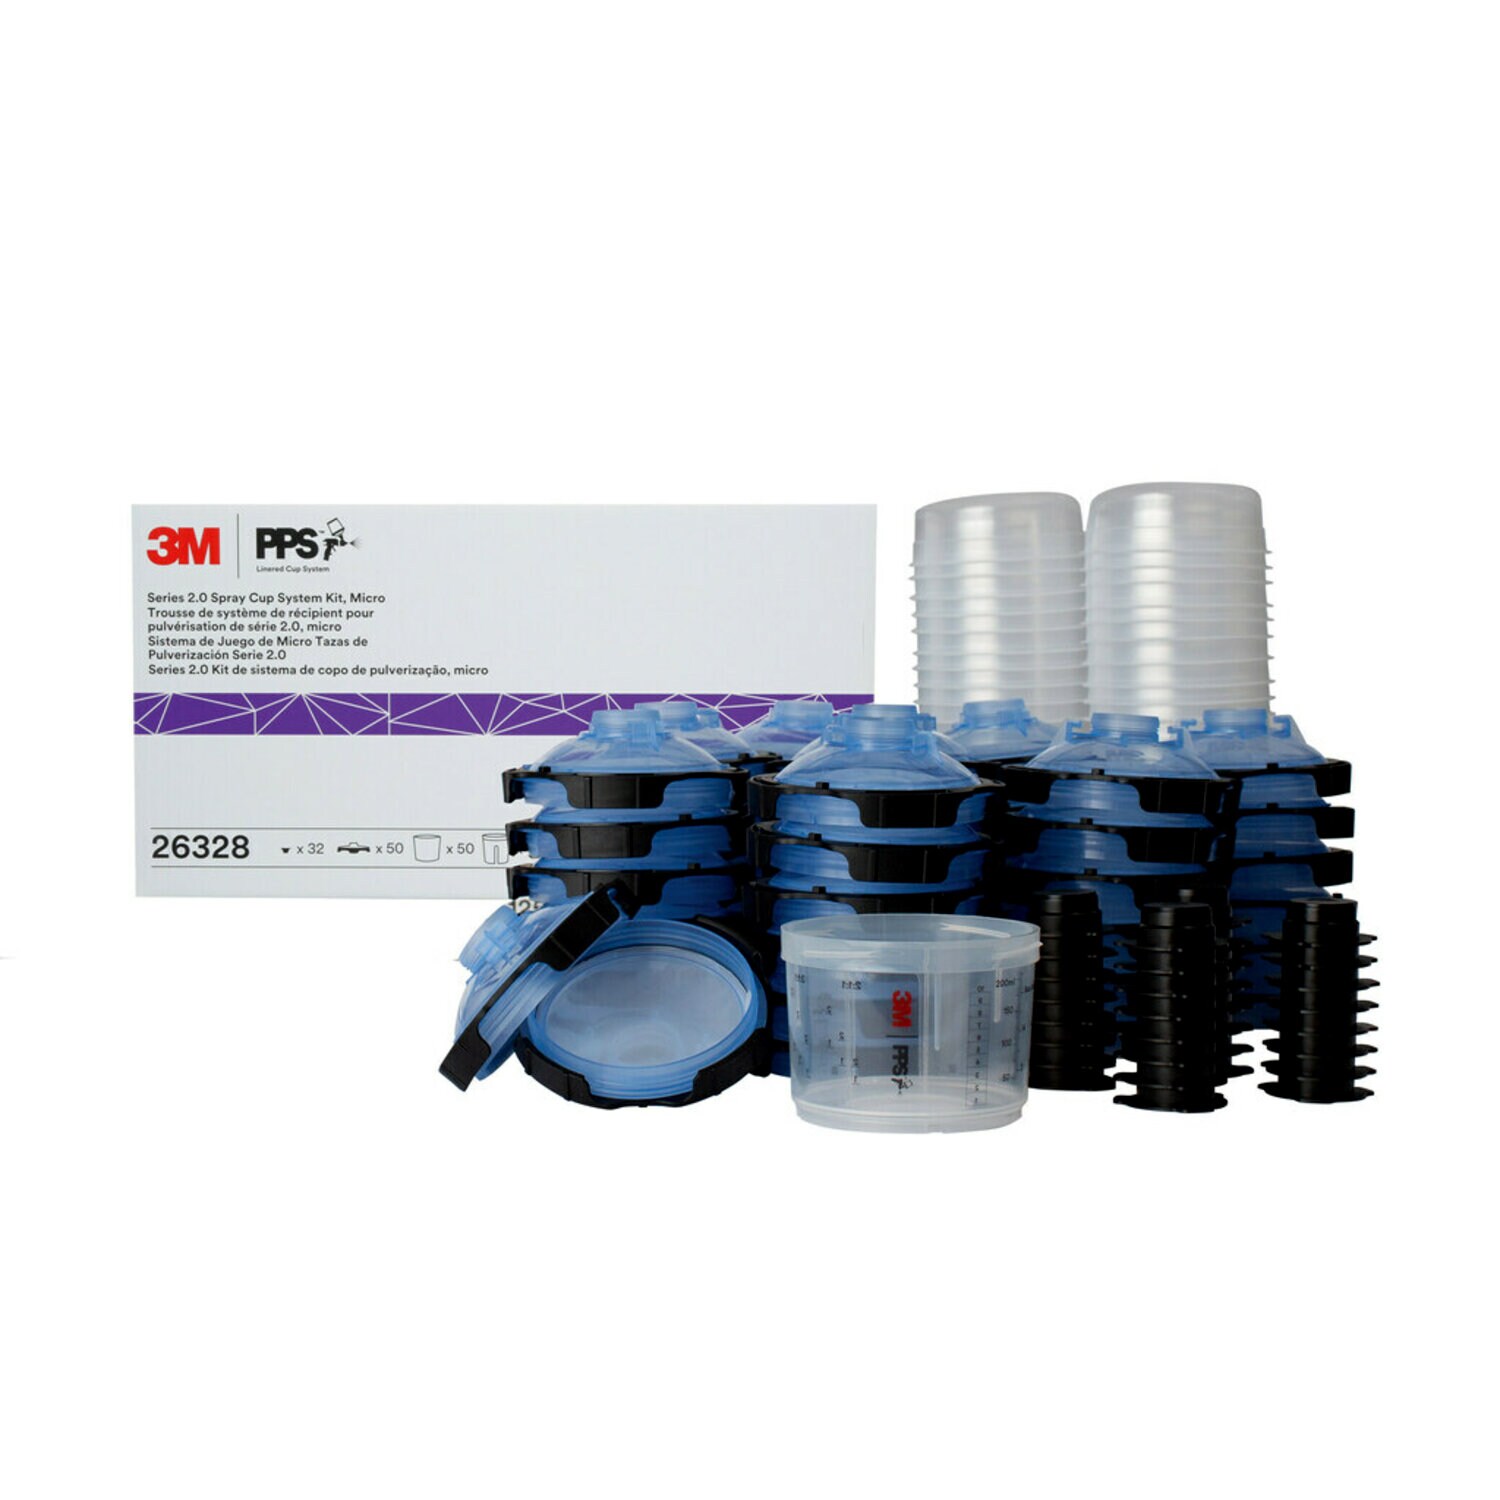 7100134639 - 3M PPS Series 2.0 Spray Cup System Kit 26328, Micro (3 fl oz, 90 mL),
125 Micron Filter, 1 Kit/Case